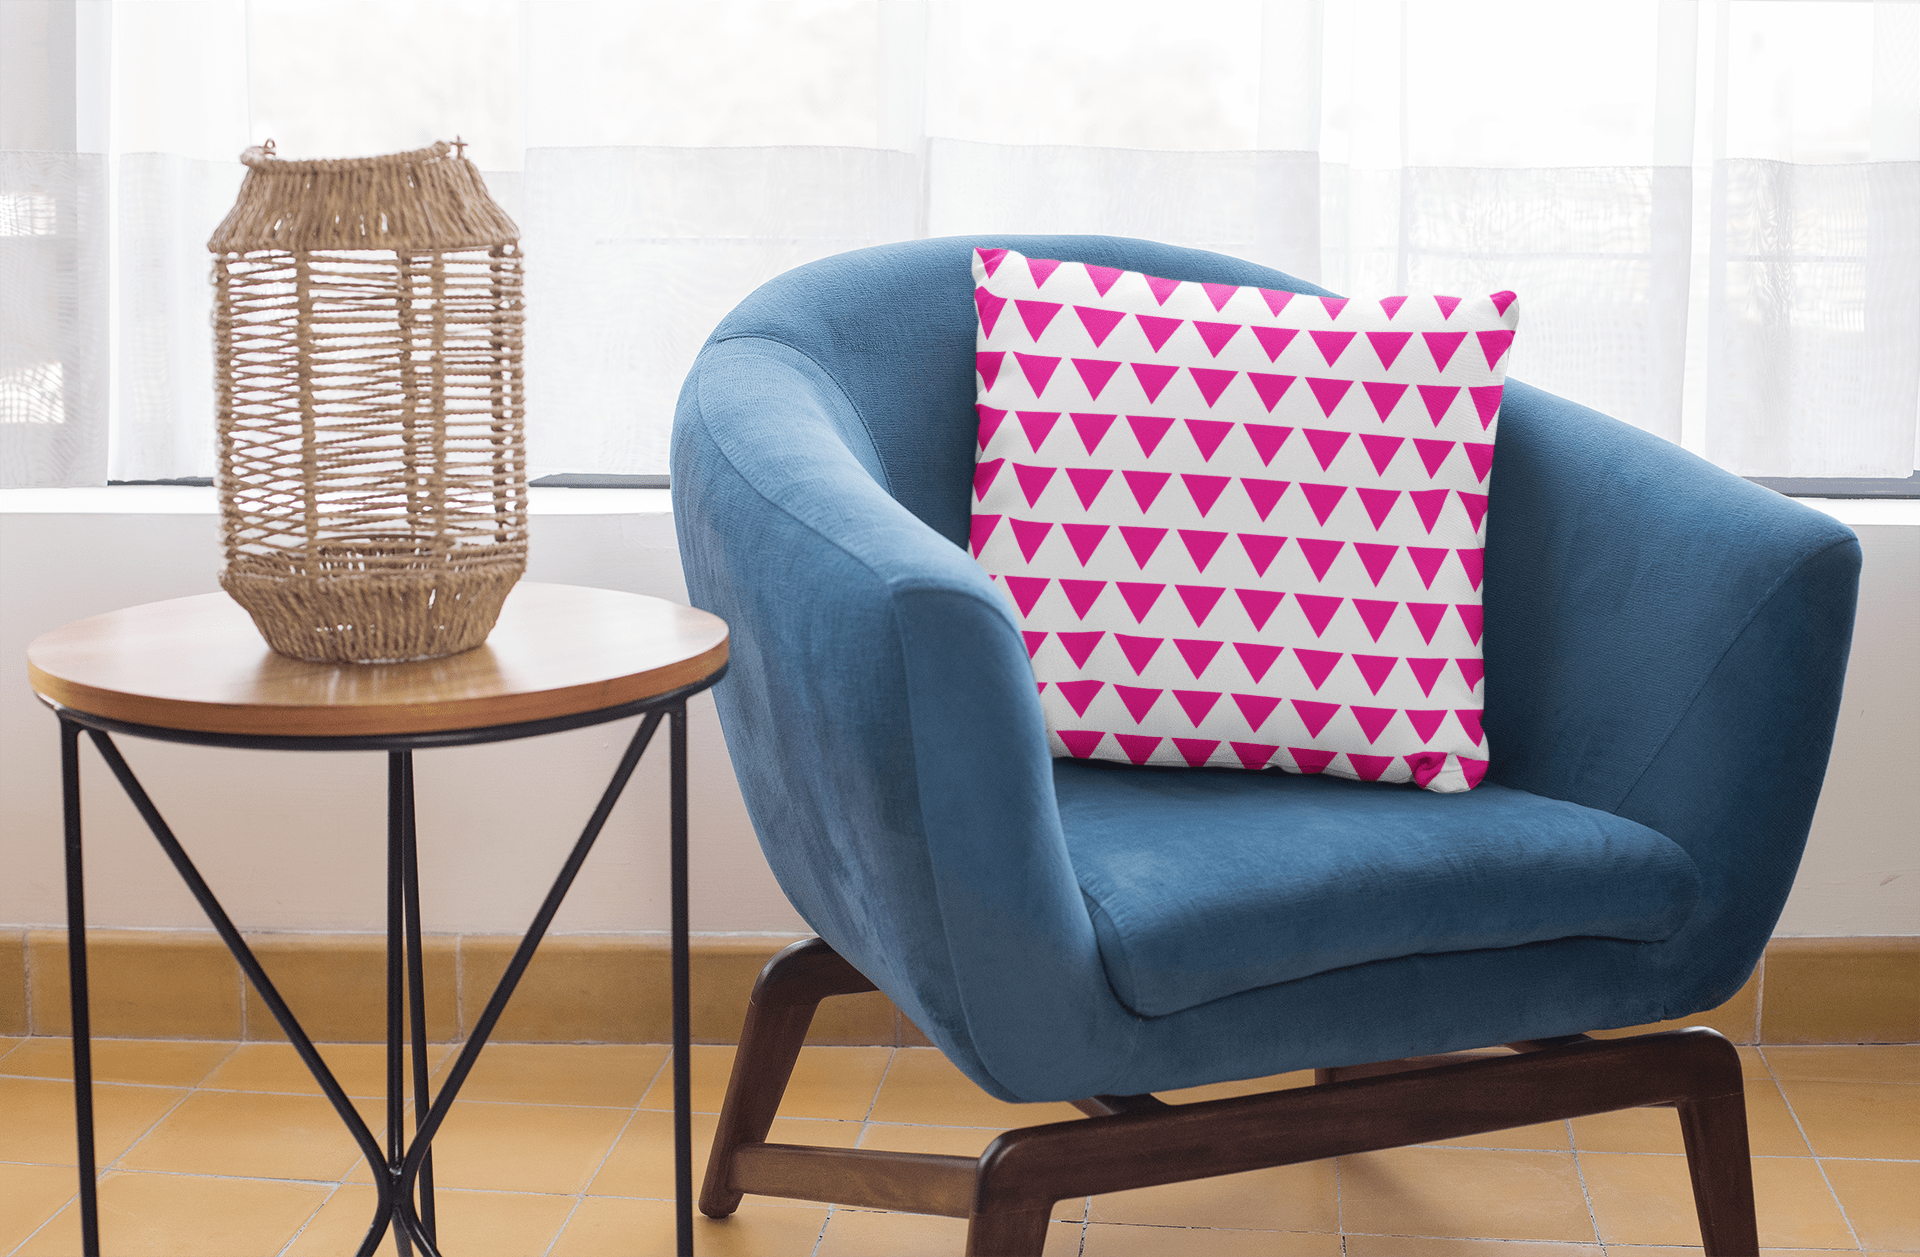 Shop Triangle Pattern Bright Pink on White Premium Decorative Throw Pillow Cushion, Pillow, USA Boutique